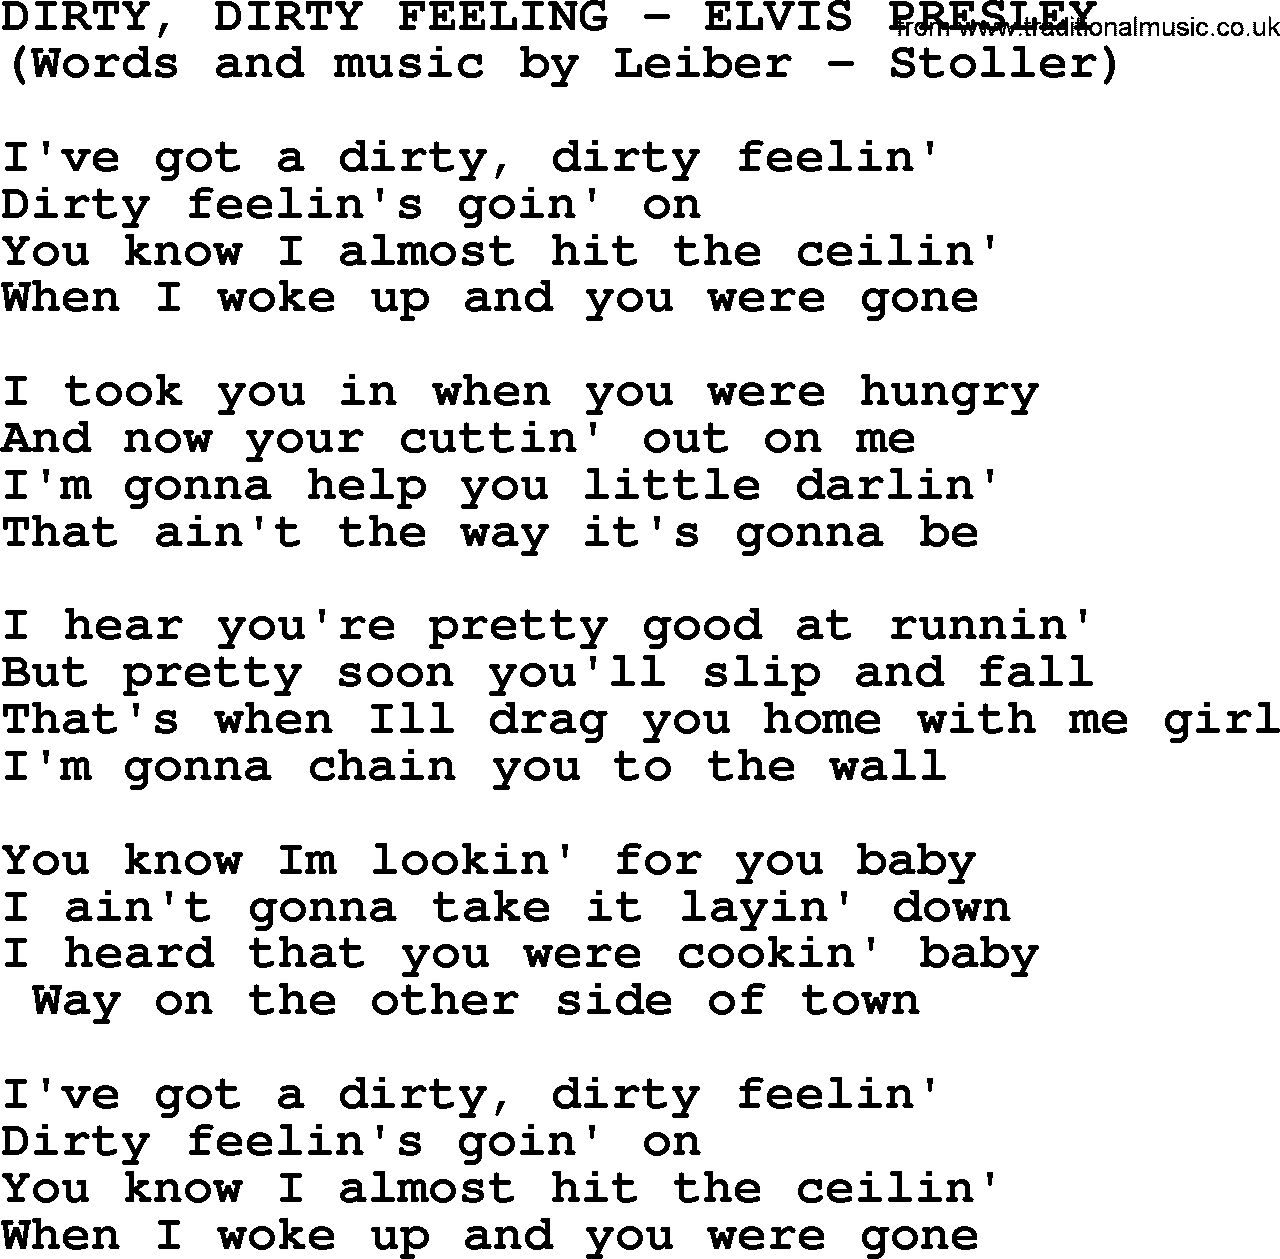 Elvis Presley song: Dirty, Dirty Feeling lyrics